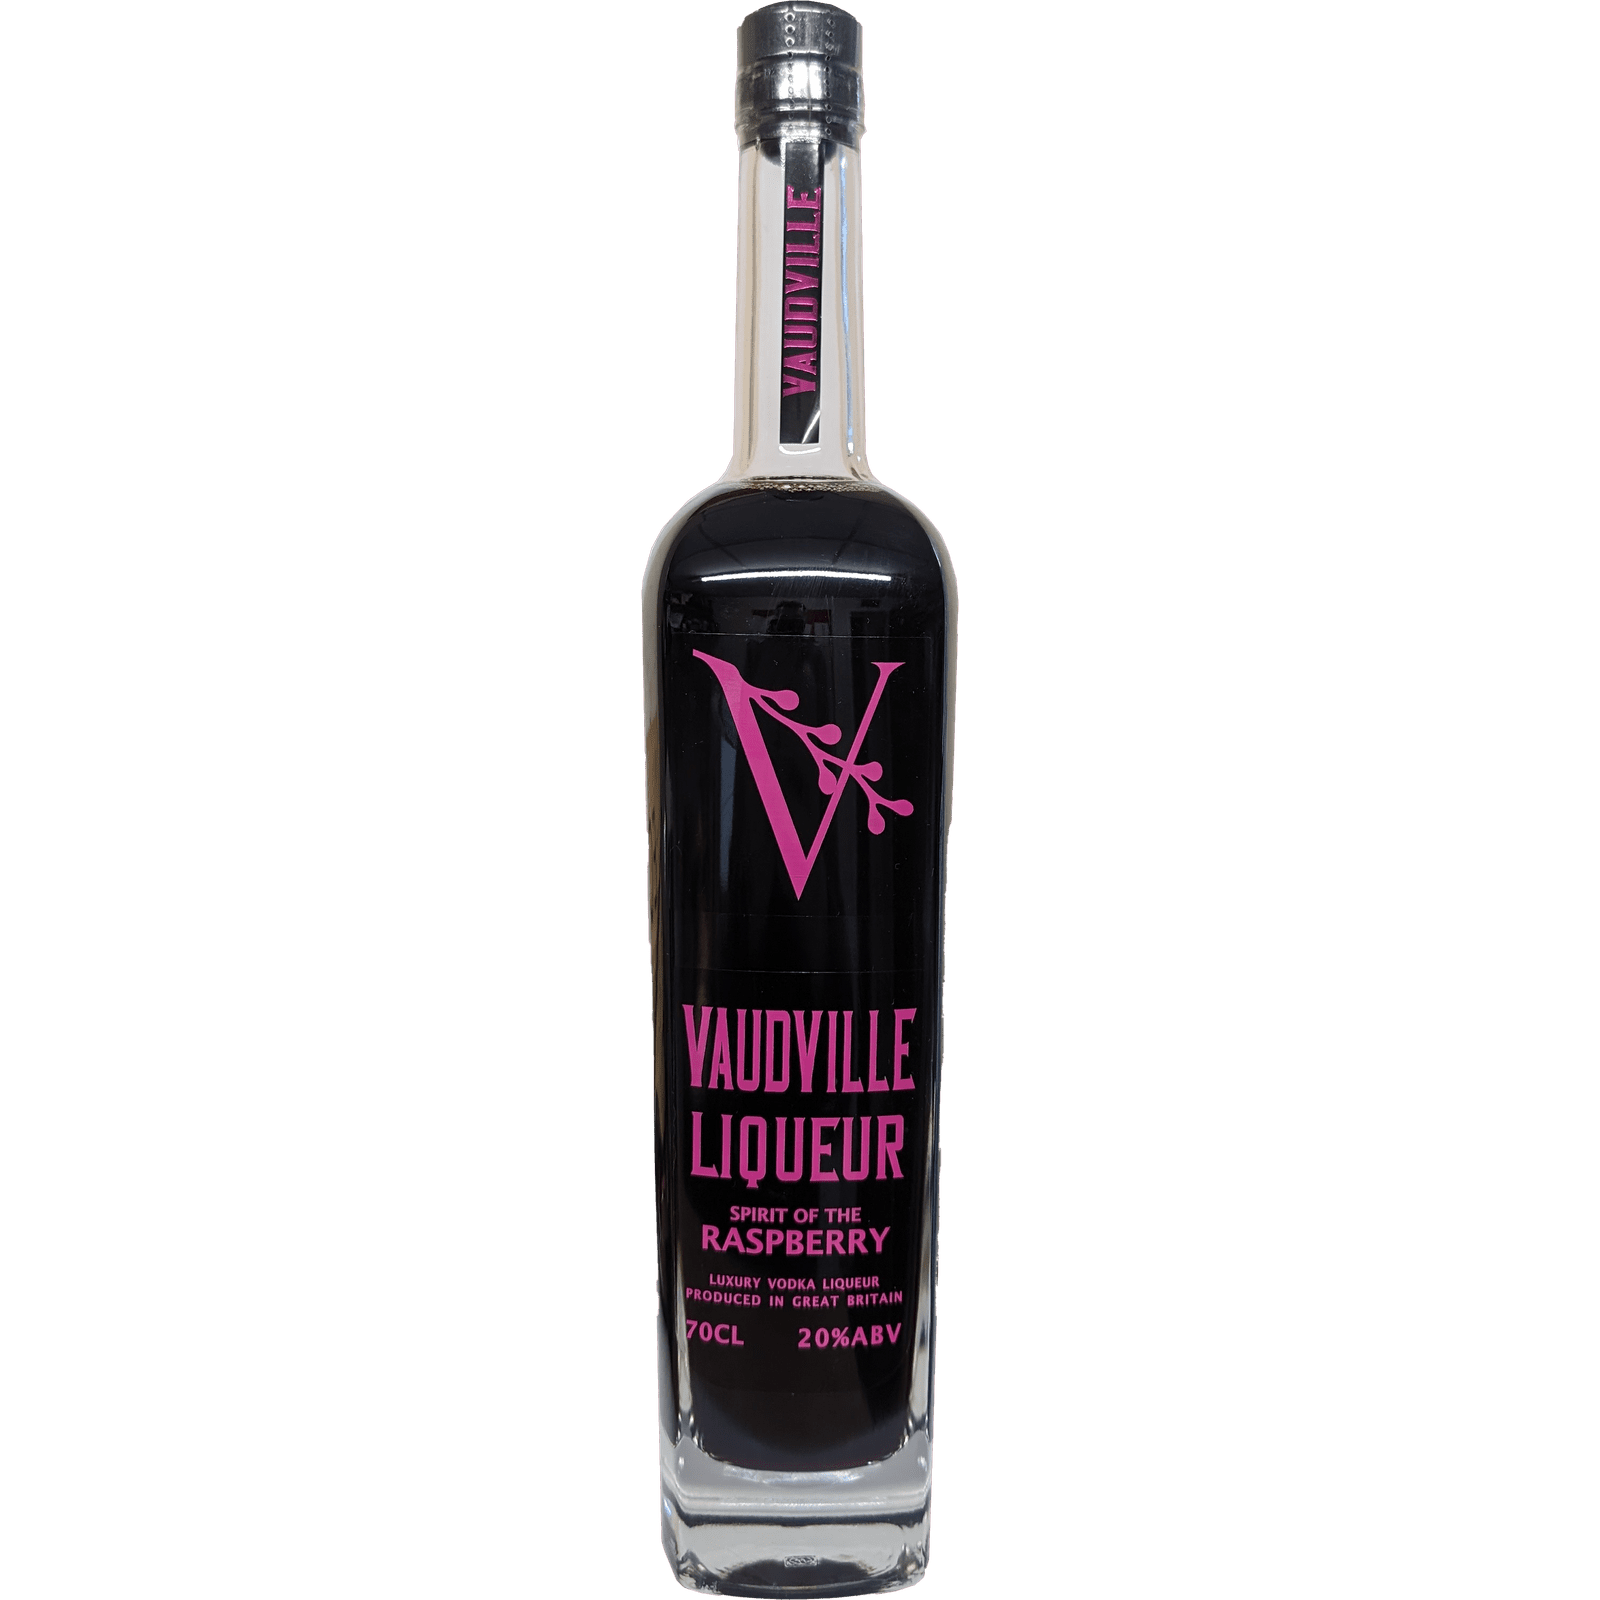 Vaudville Liqueur Spirit of the Raspberry